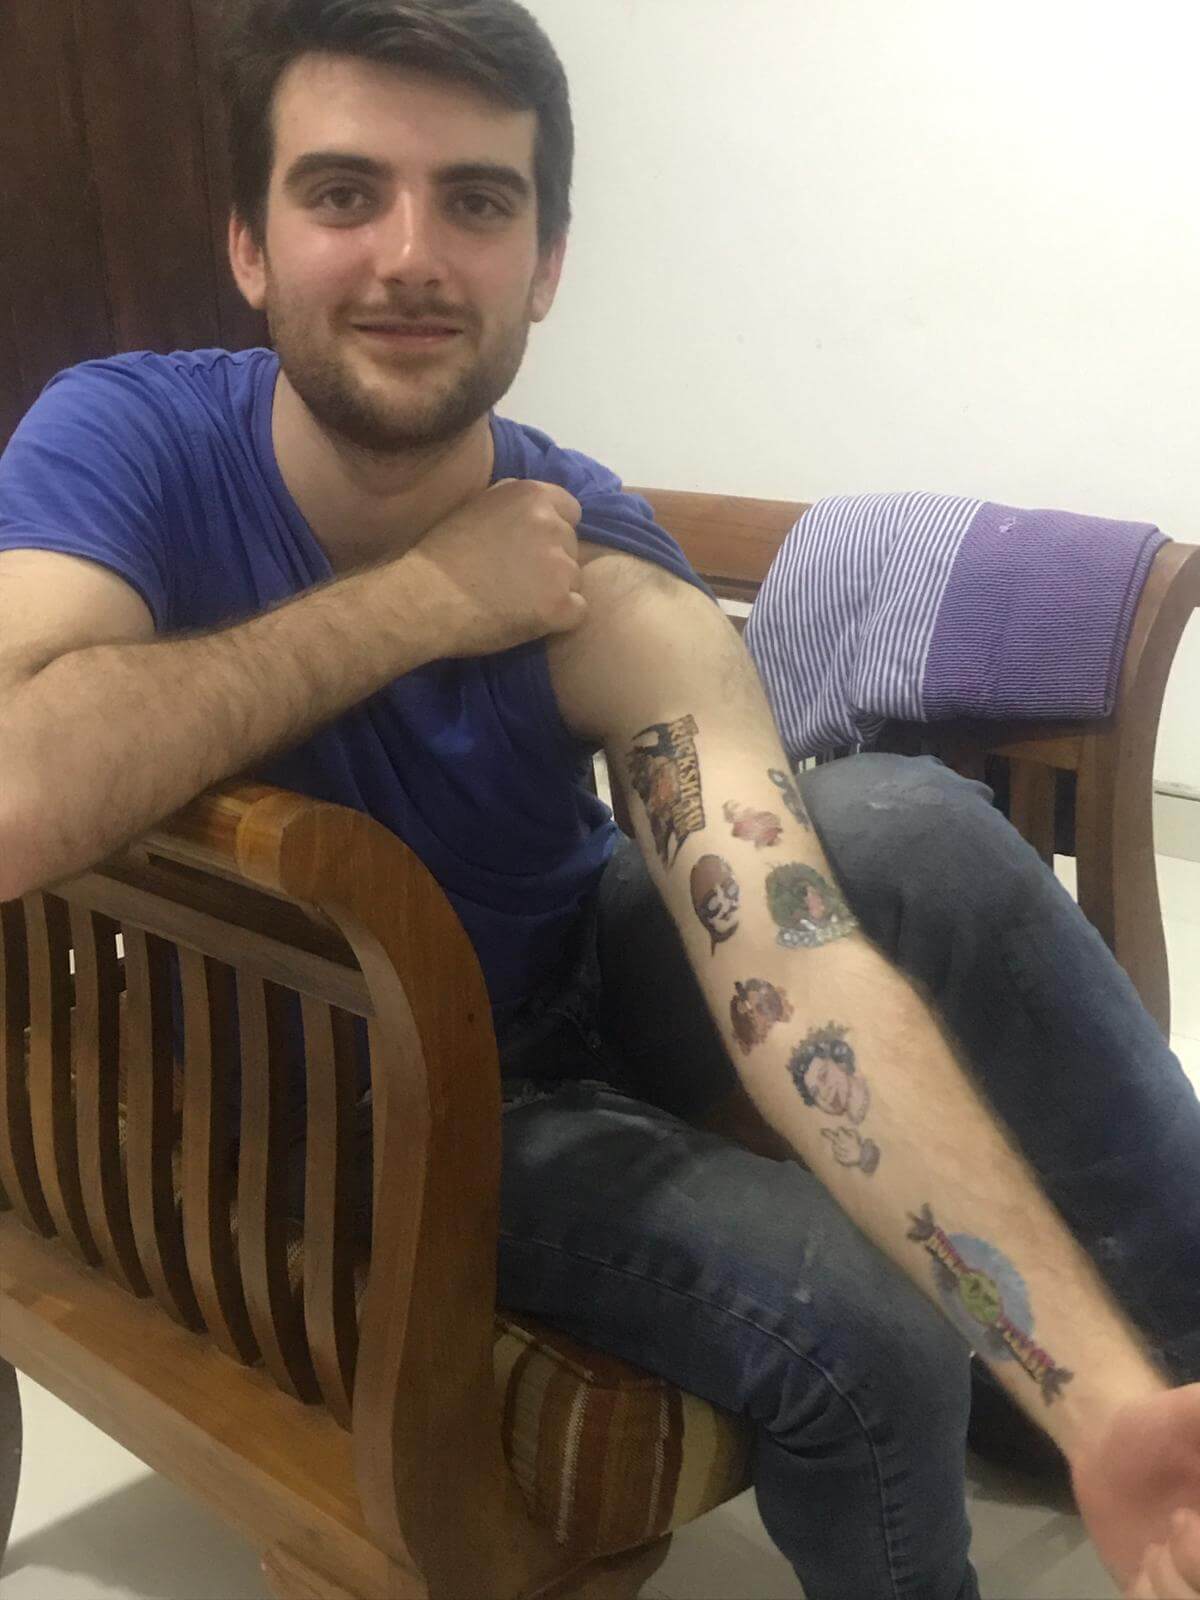 Fake tattoos on an arm